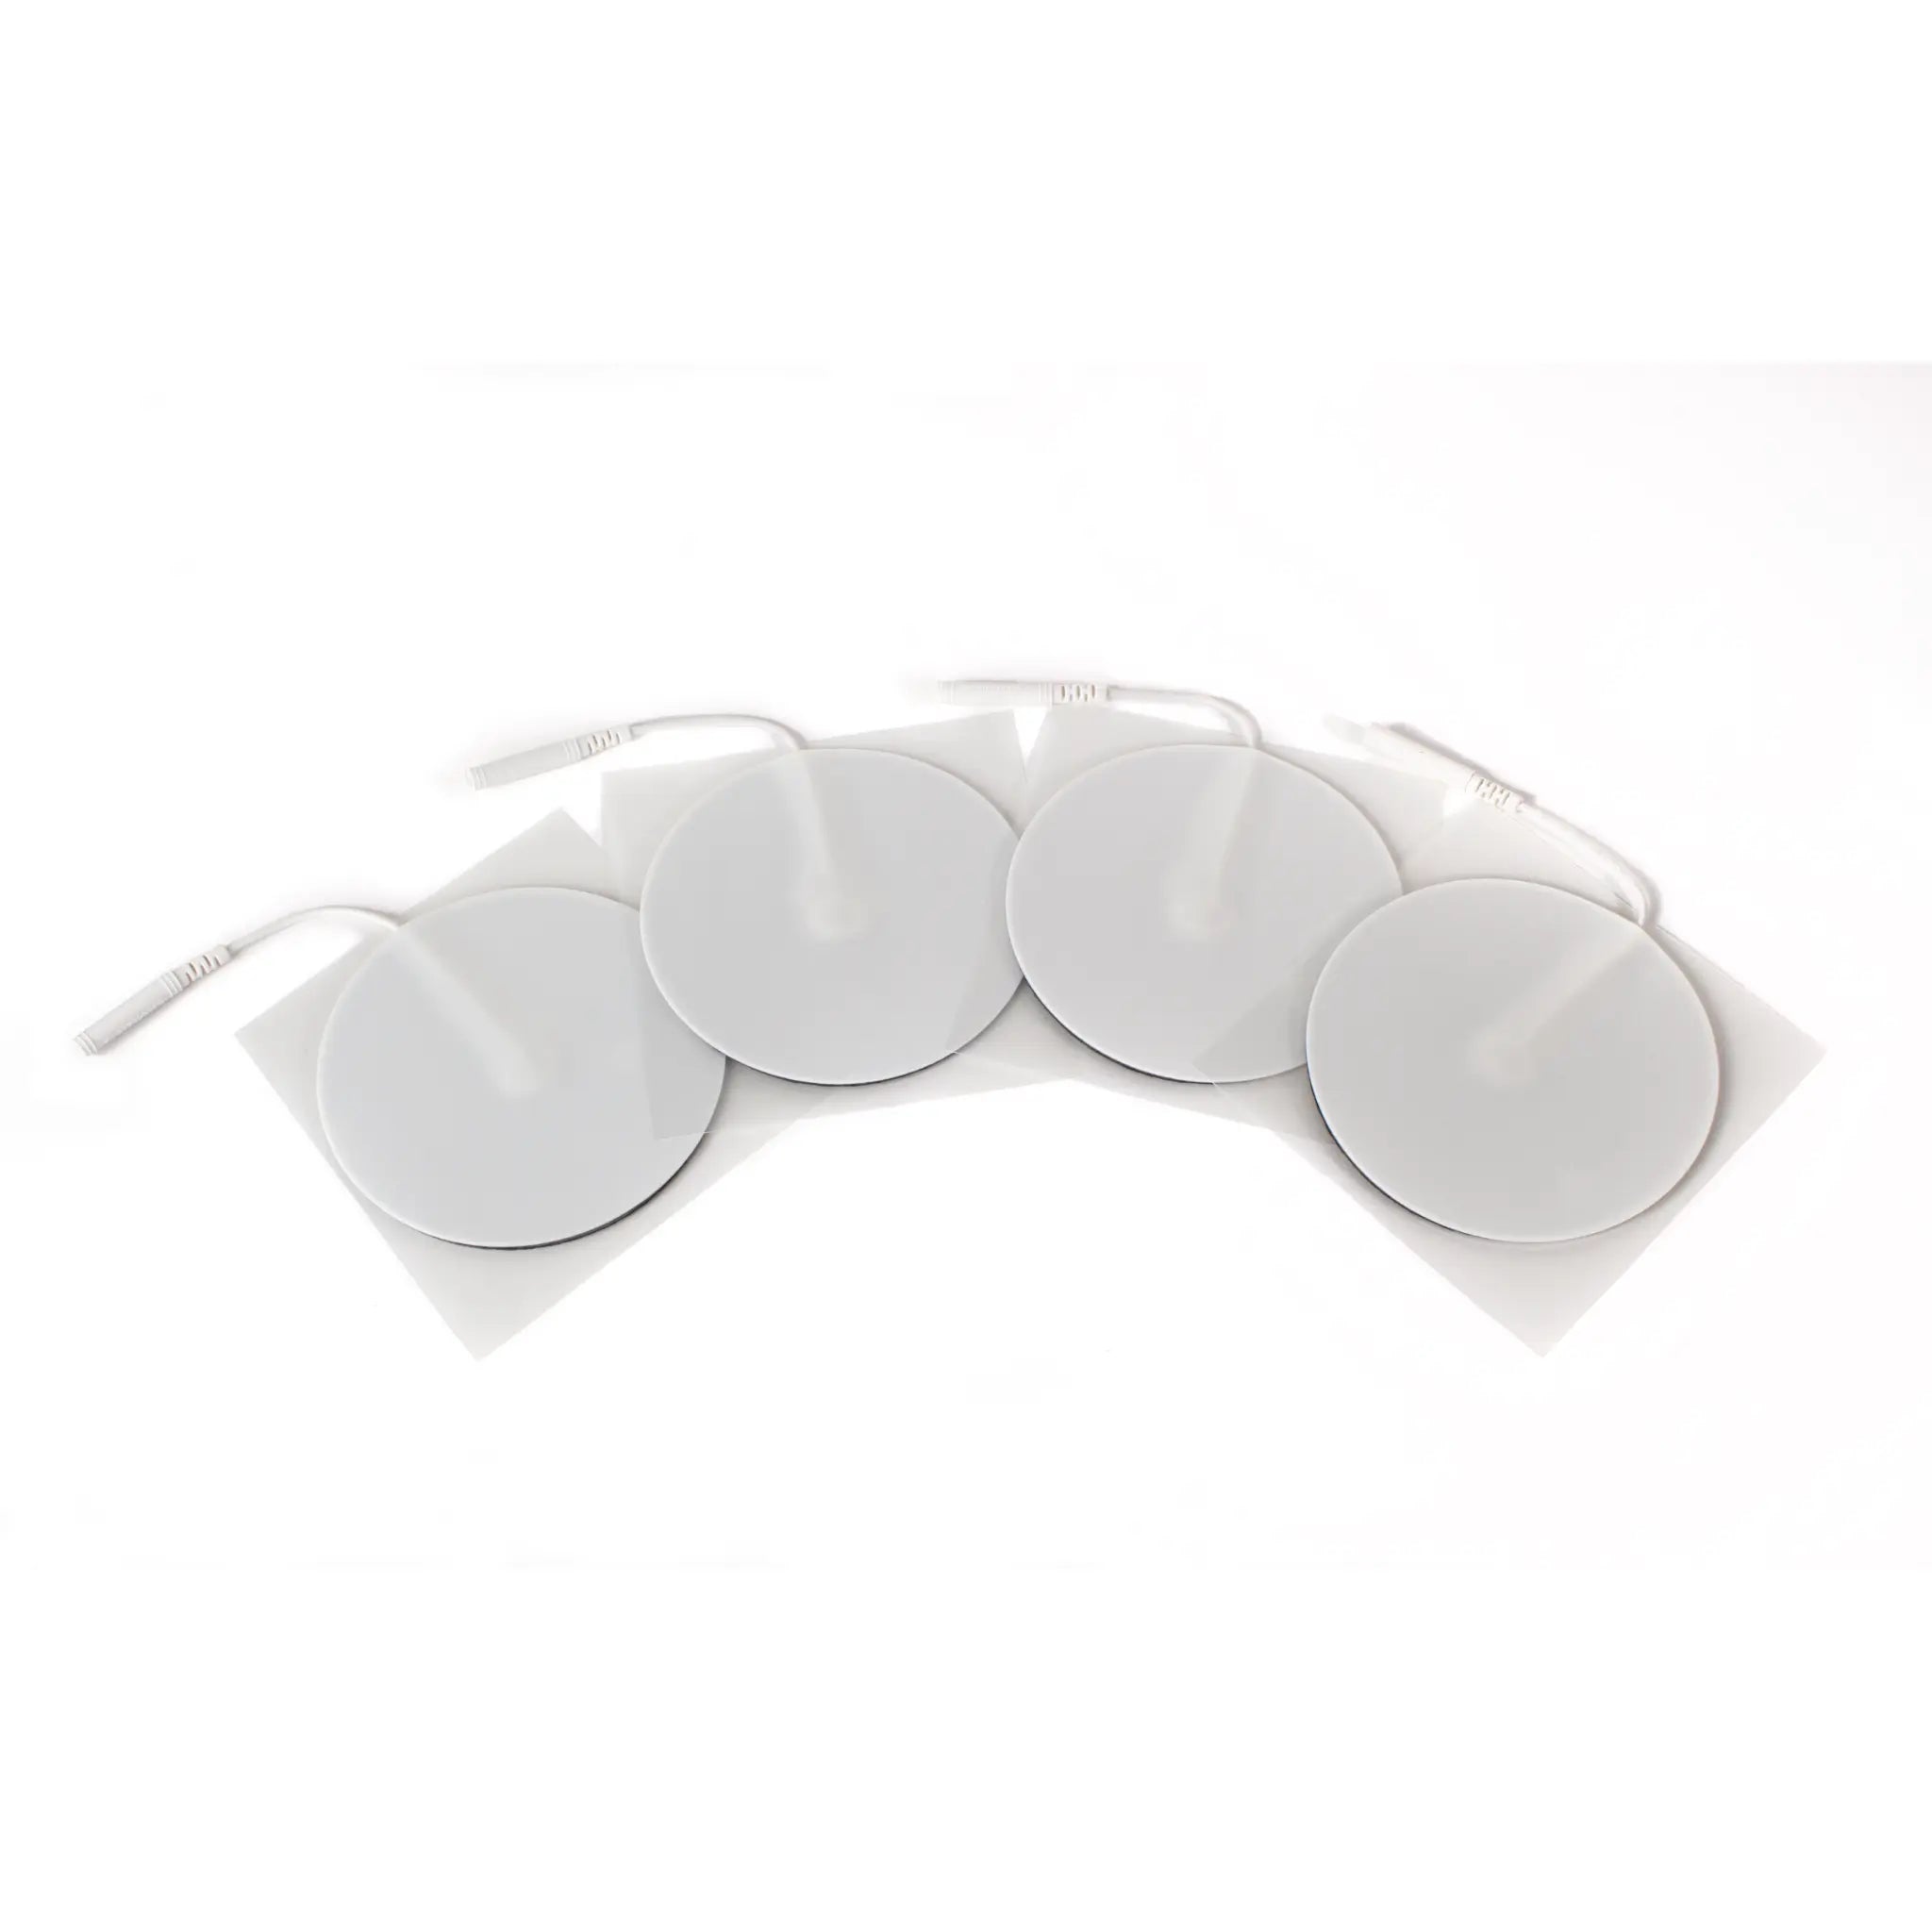 photo of 4 round conductive pads 